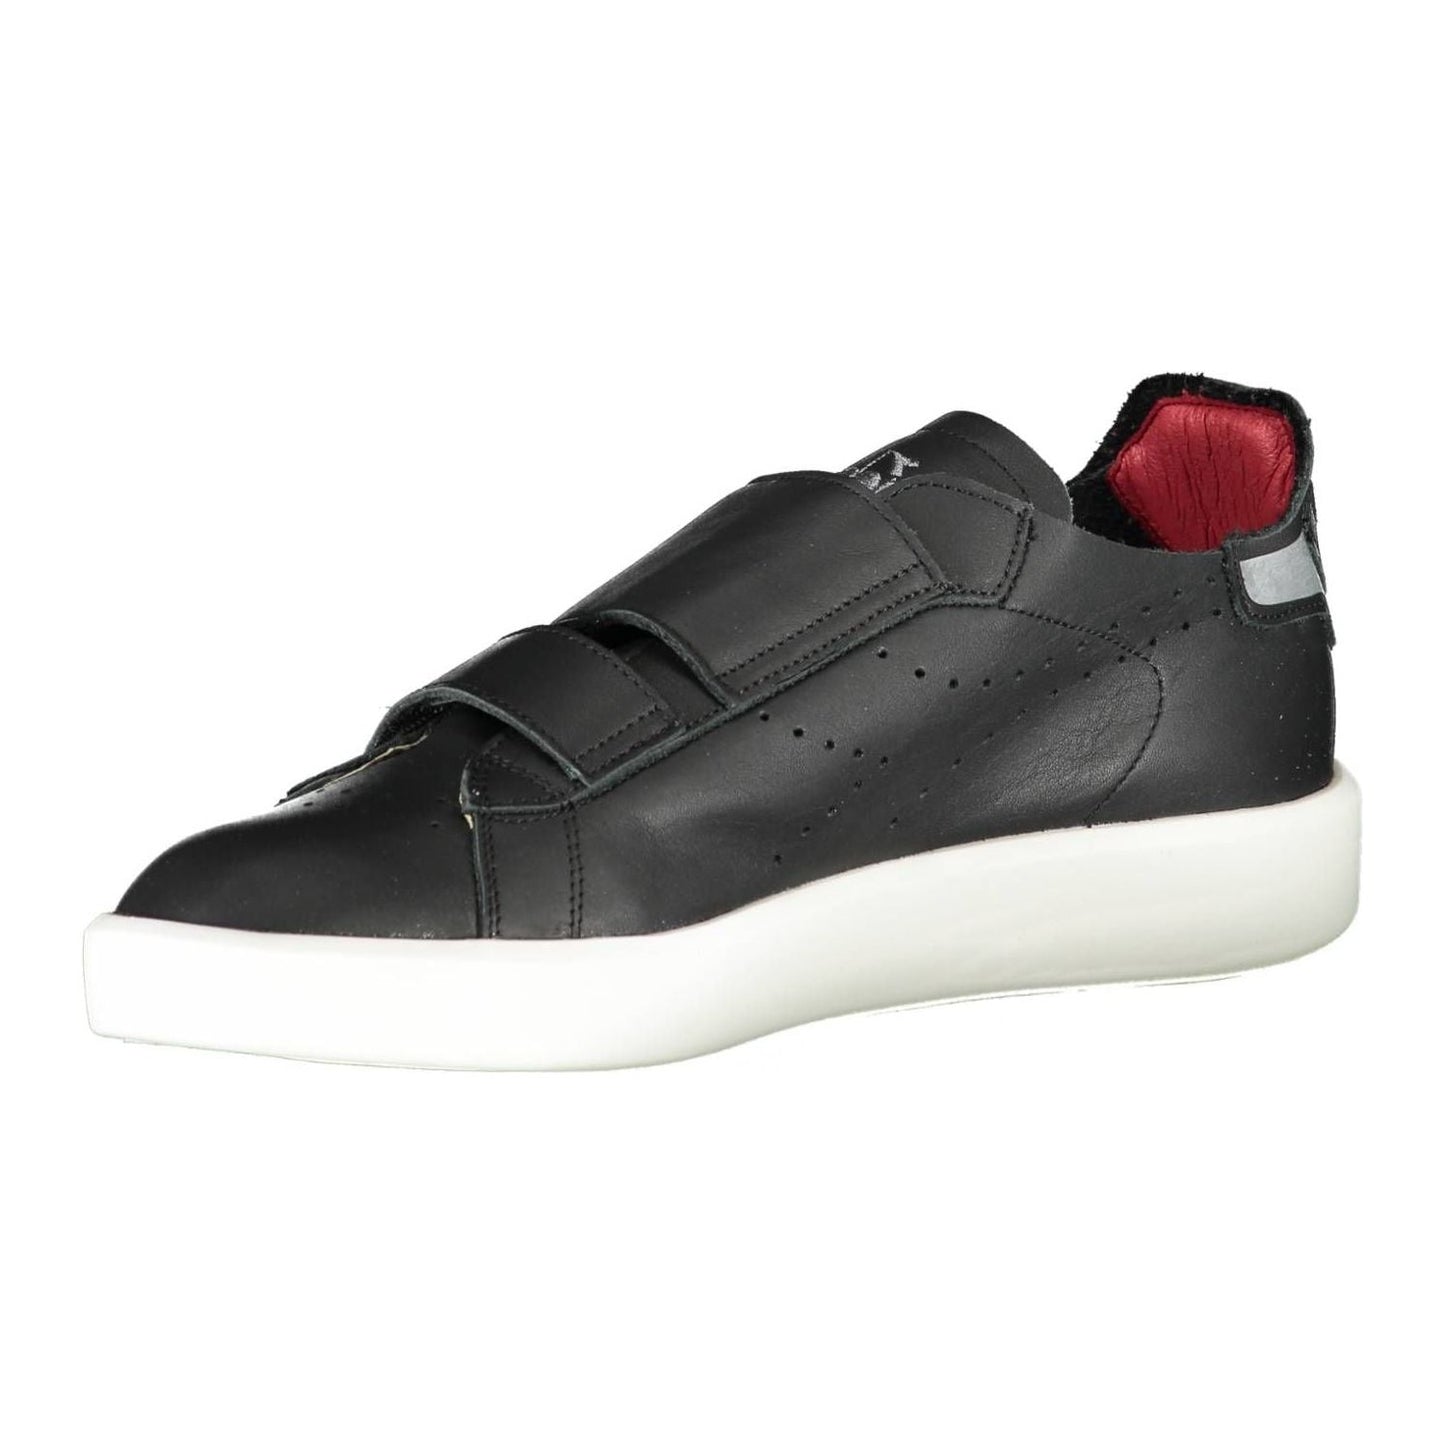 DiadoraSleek Black Leather Sneakers with Contrast DetailsMcRichard Designer Brands£119.00